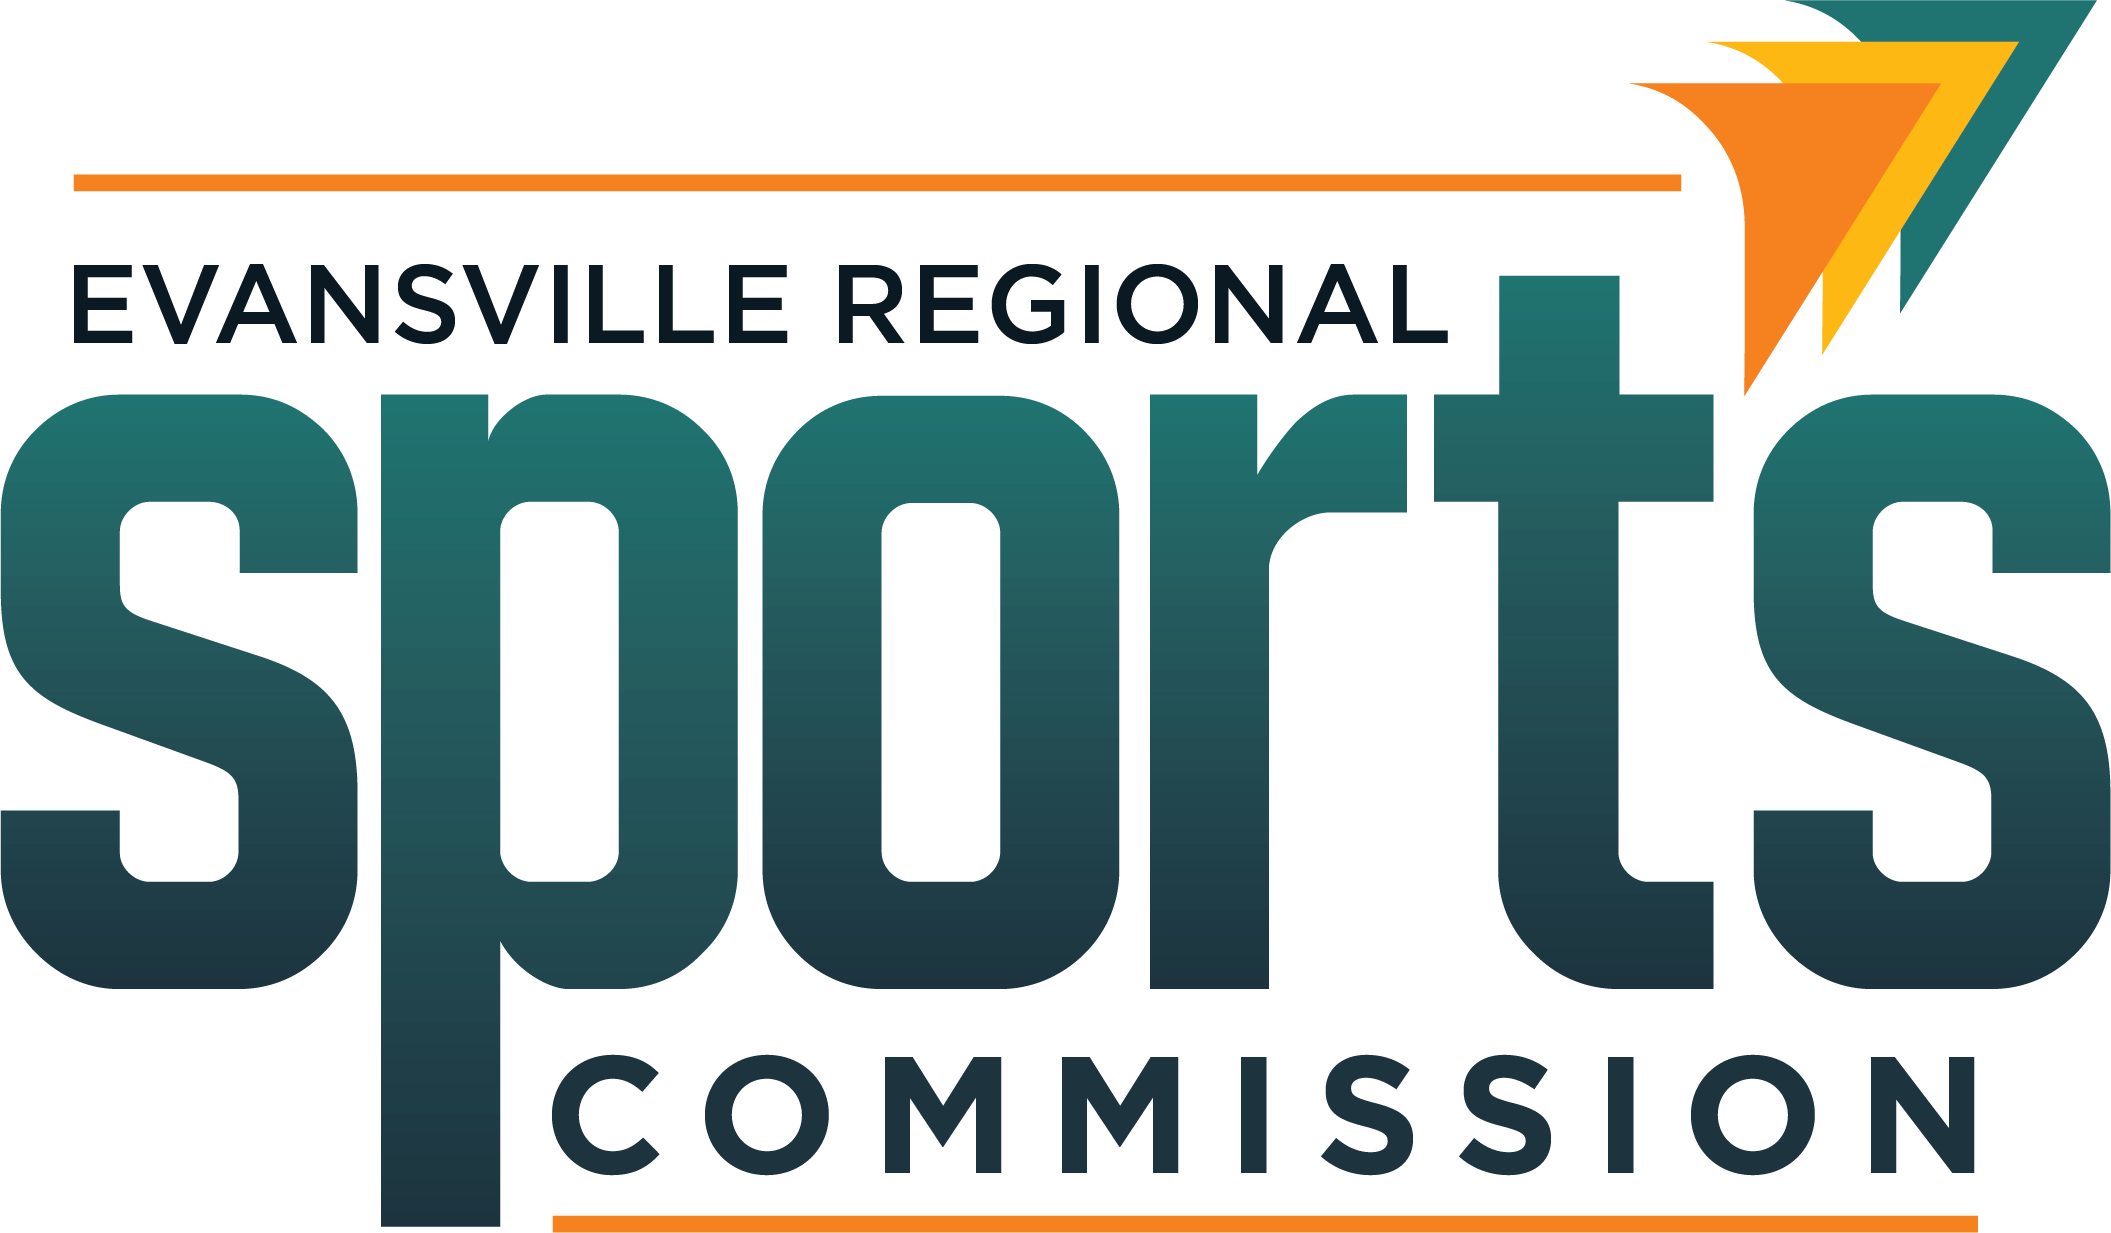 Sports Commission Logo